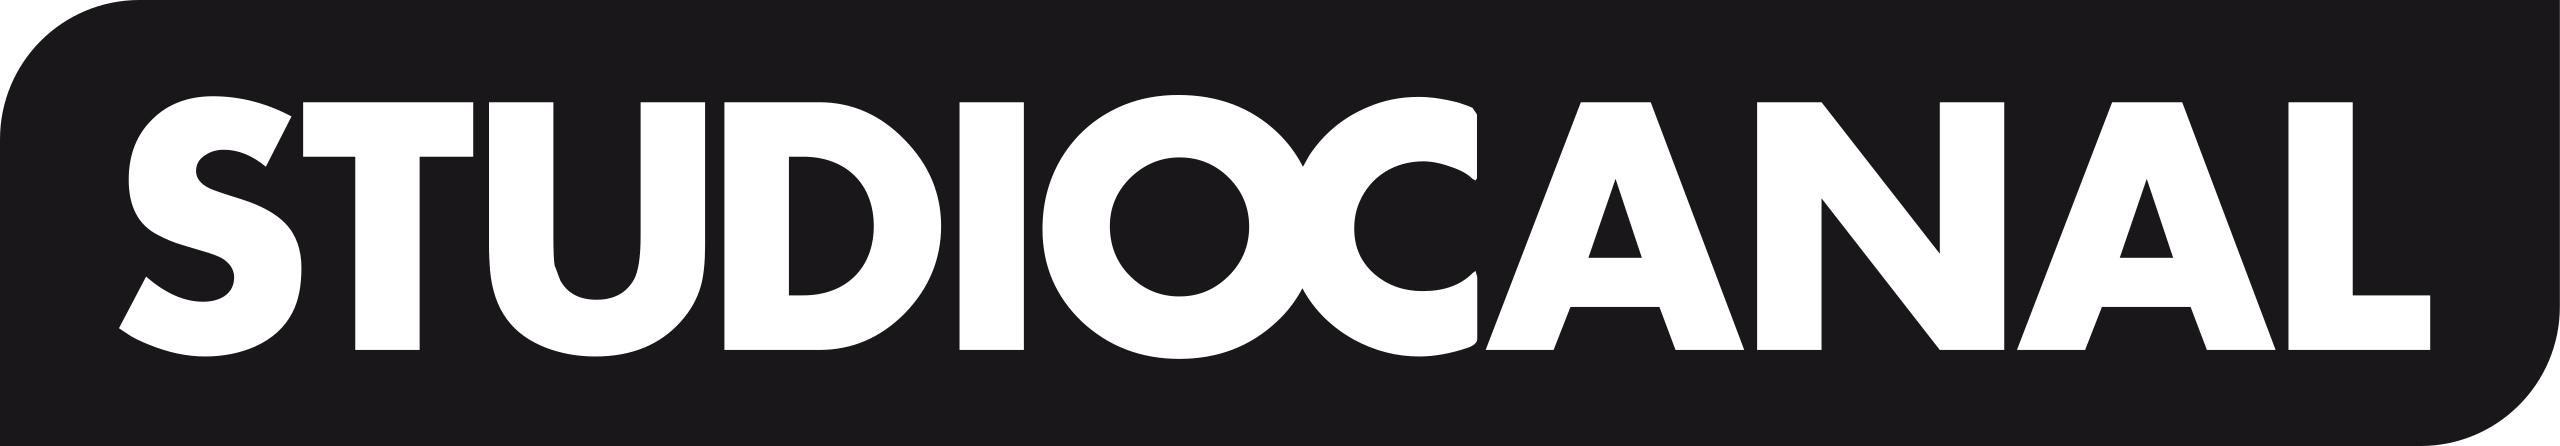 Studiocanal Logo